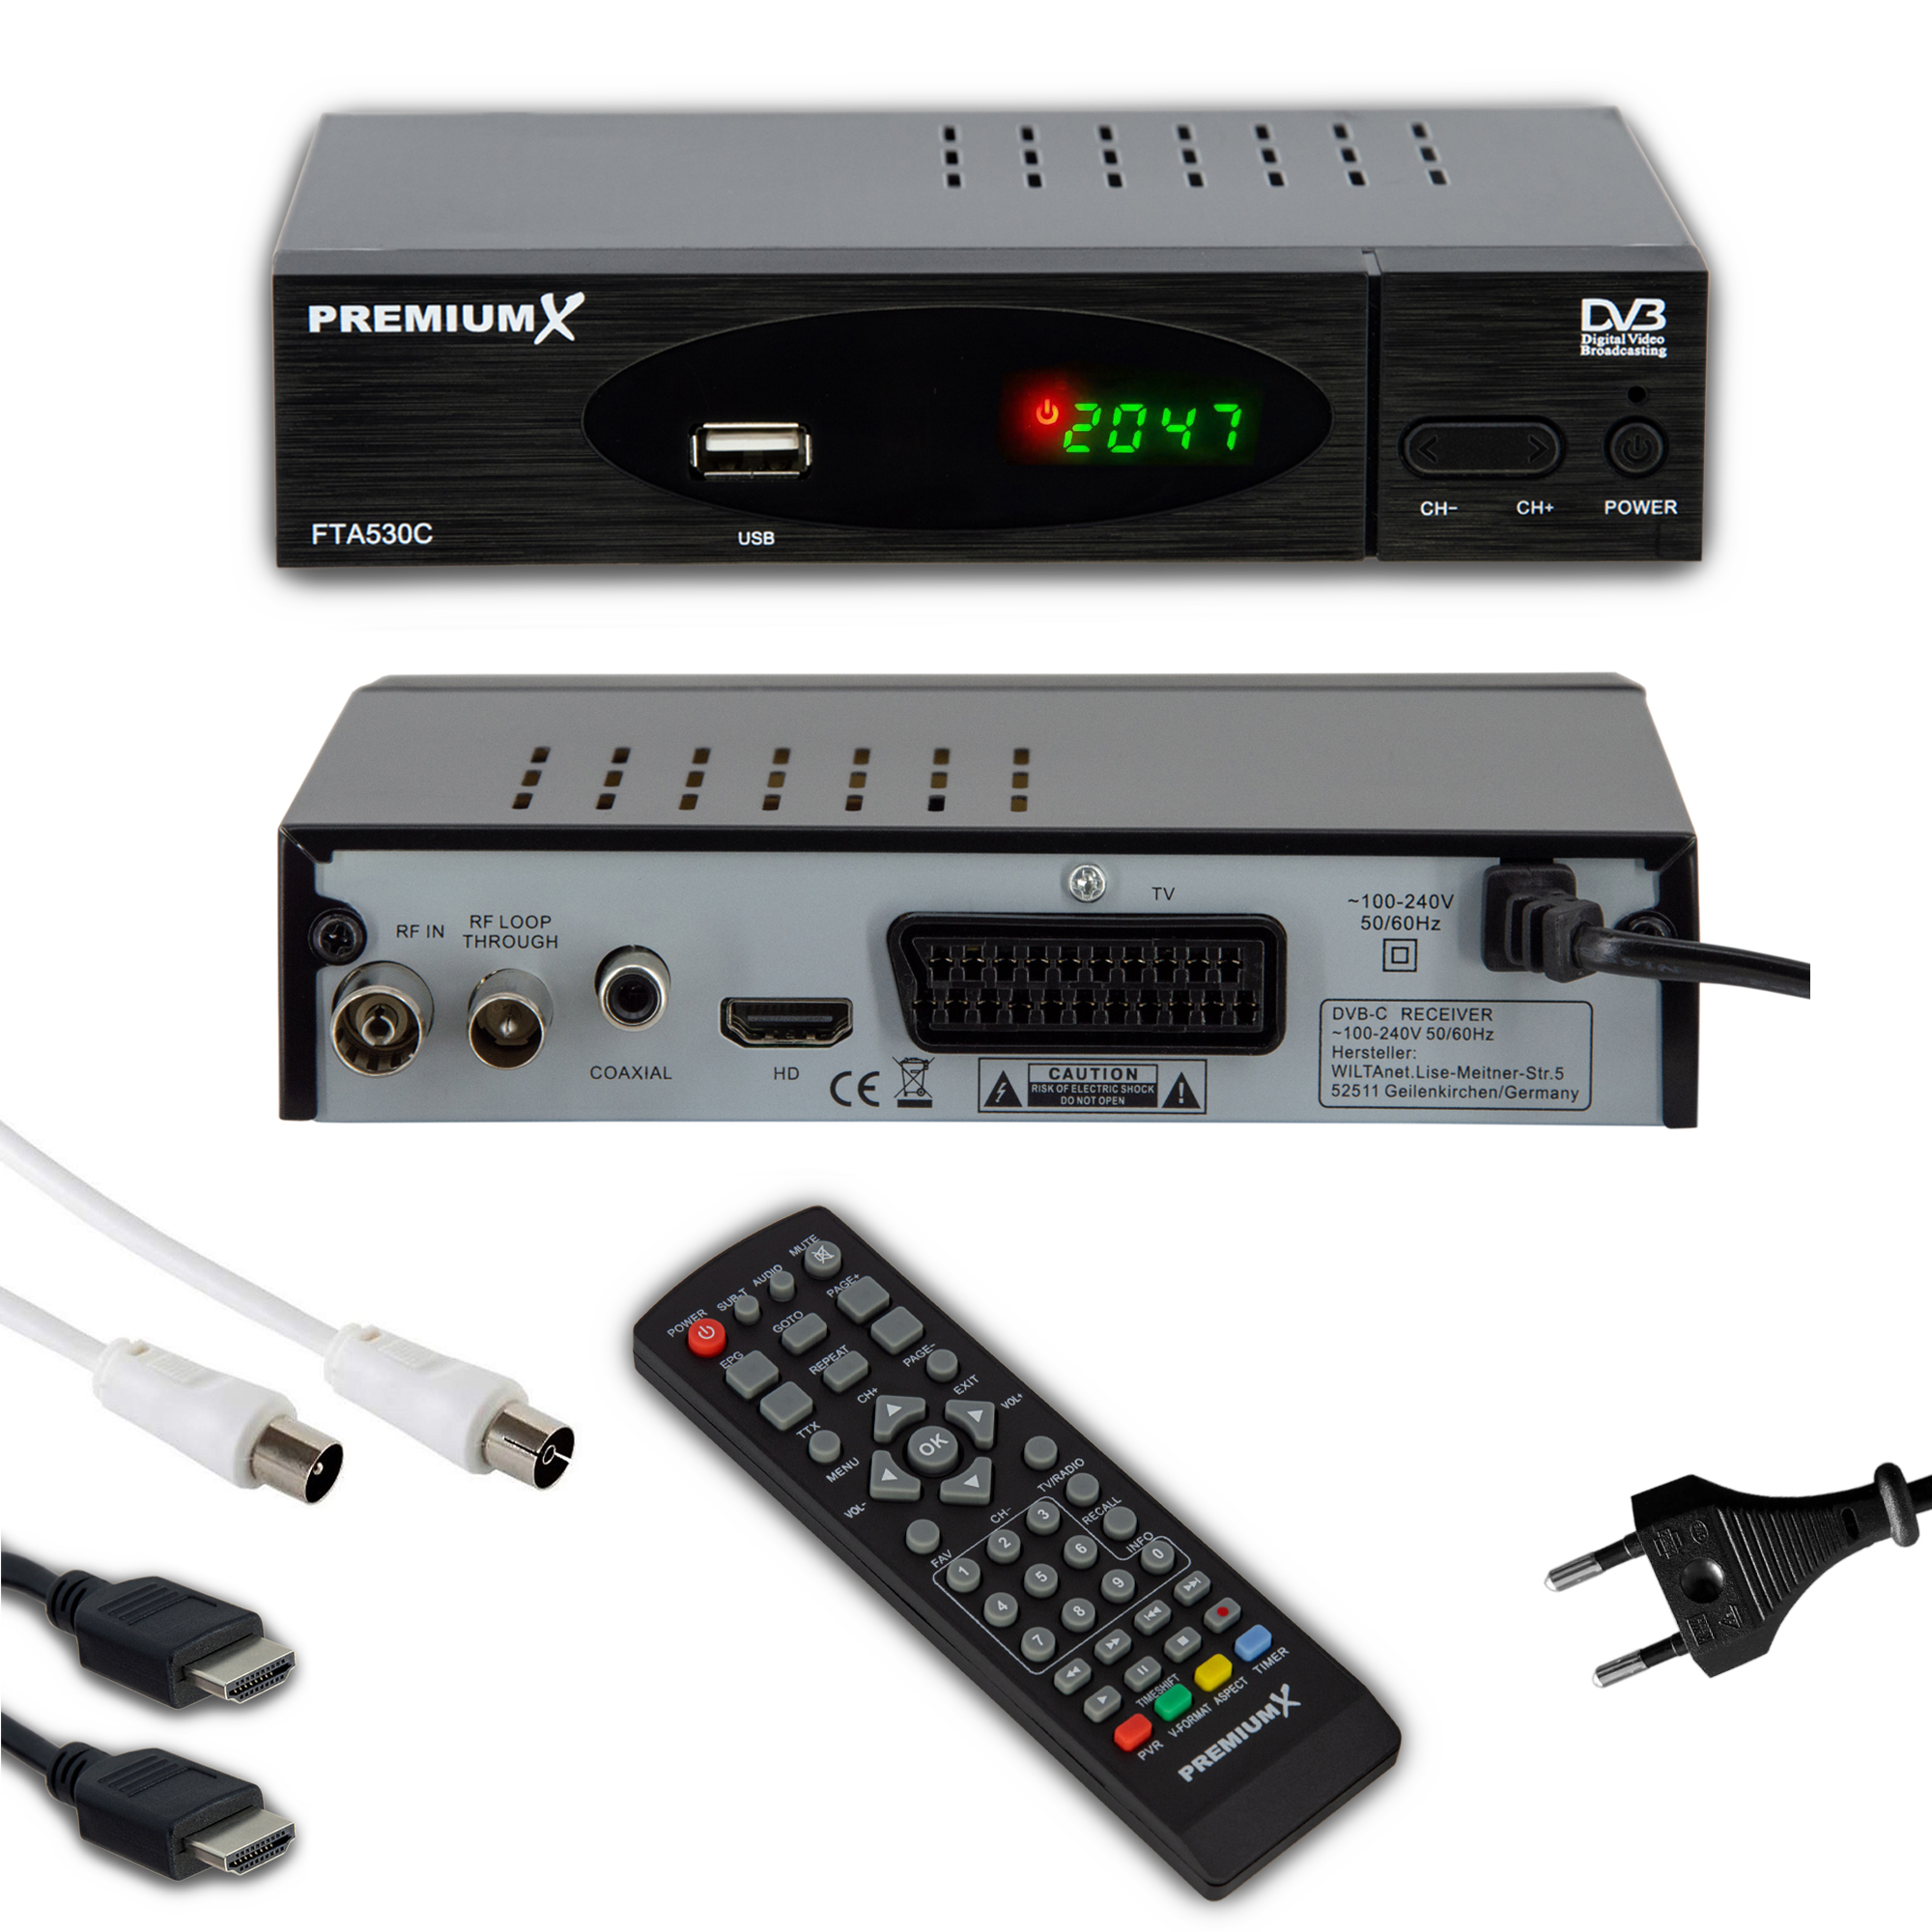 PREMIUMX FTA 530C DVB-C Kabel USB Receiver HD Antennenkabel Kabel HDMI SCART Receiver (Schwarz)